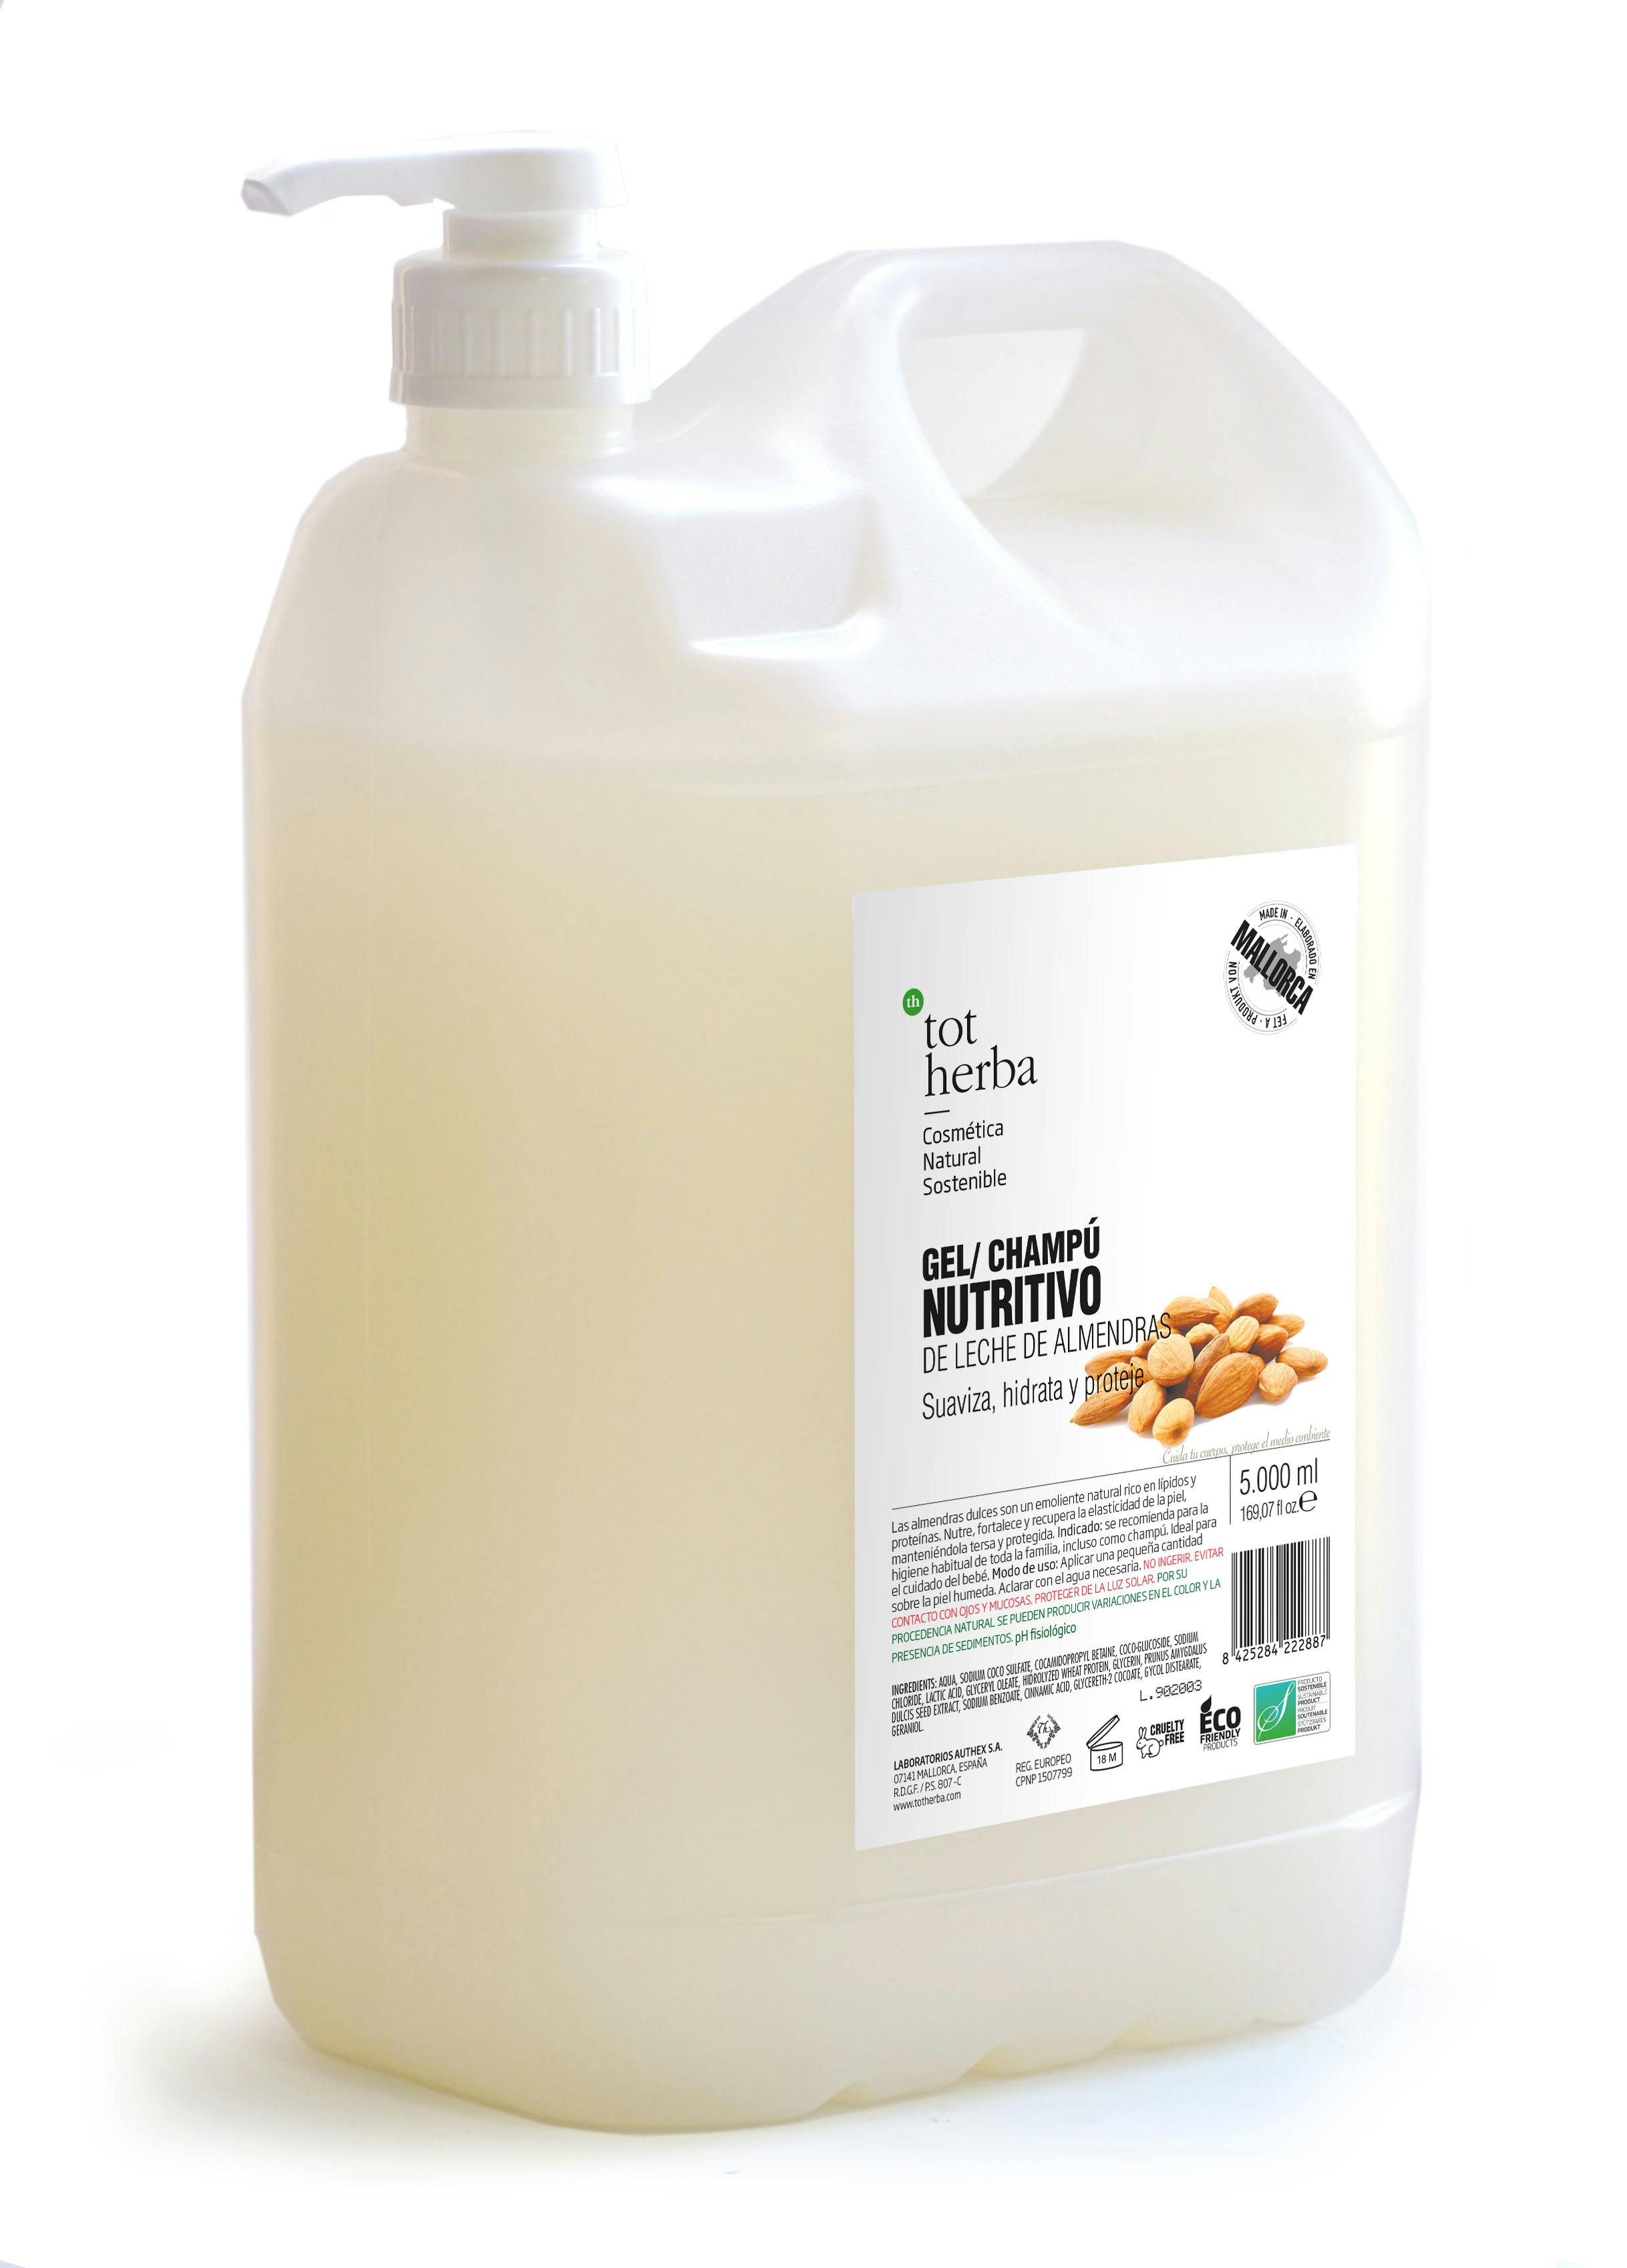 Nourishing shower gel of almond milk in 5 liter carafe